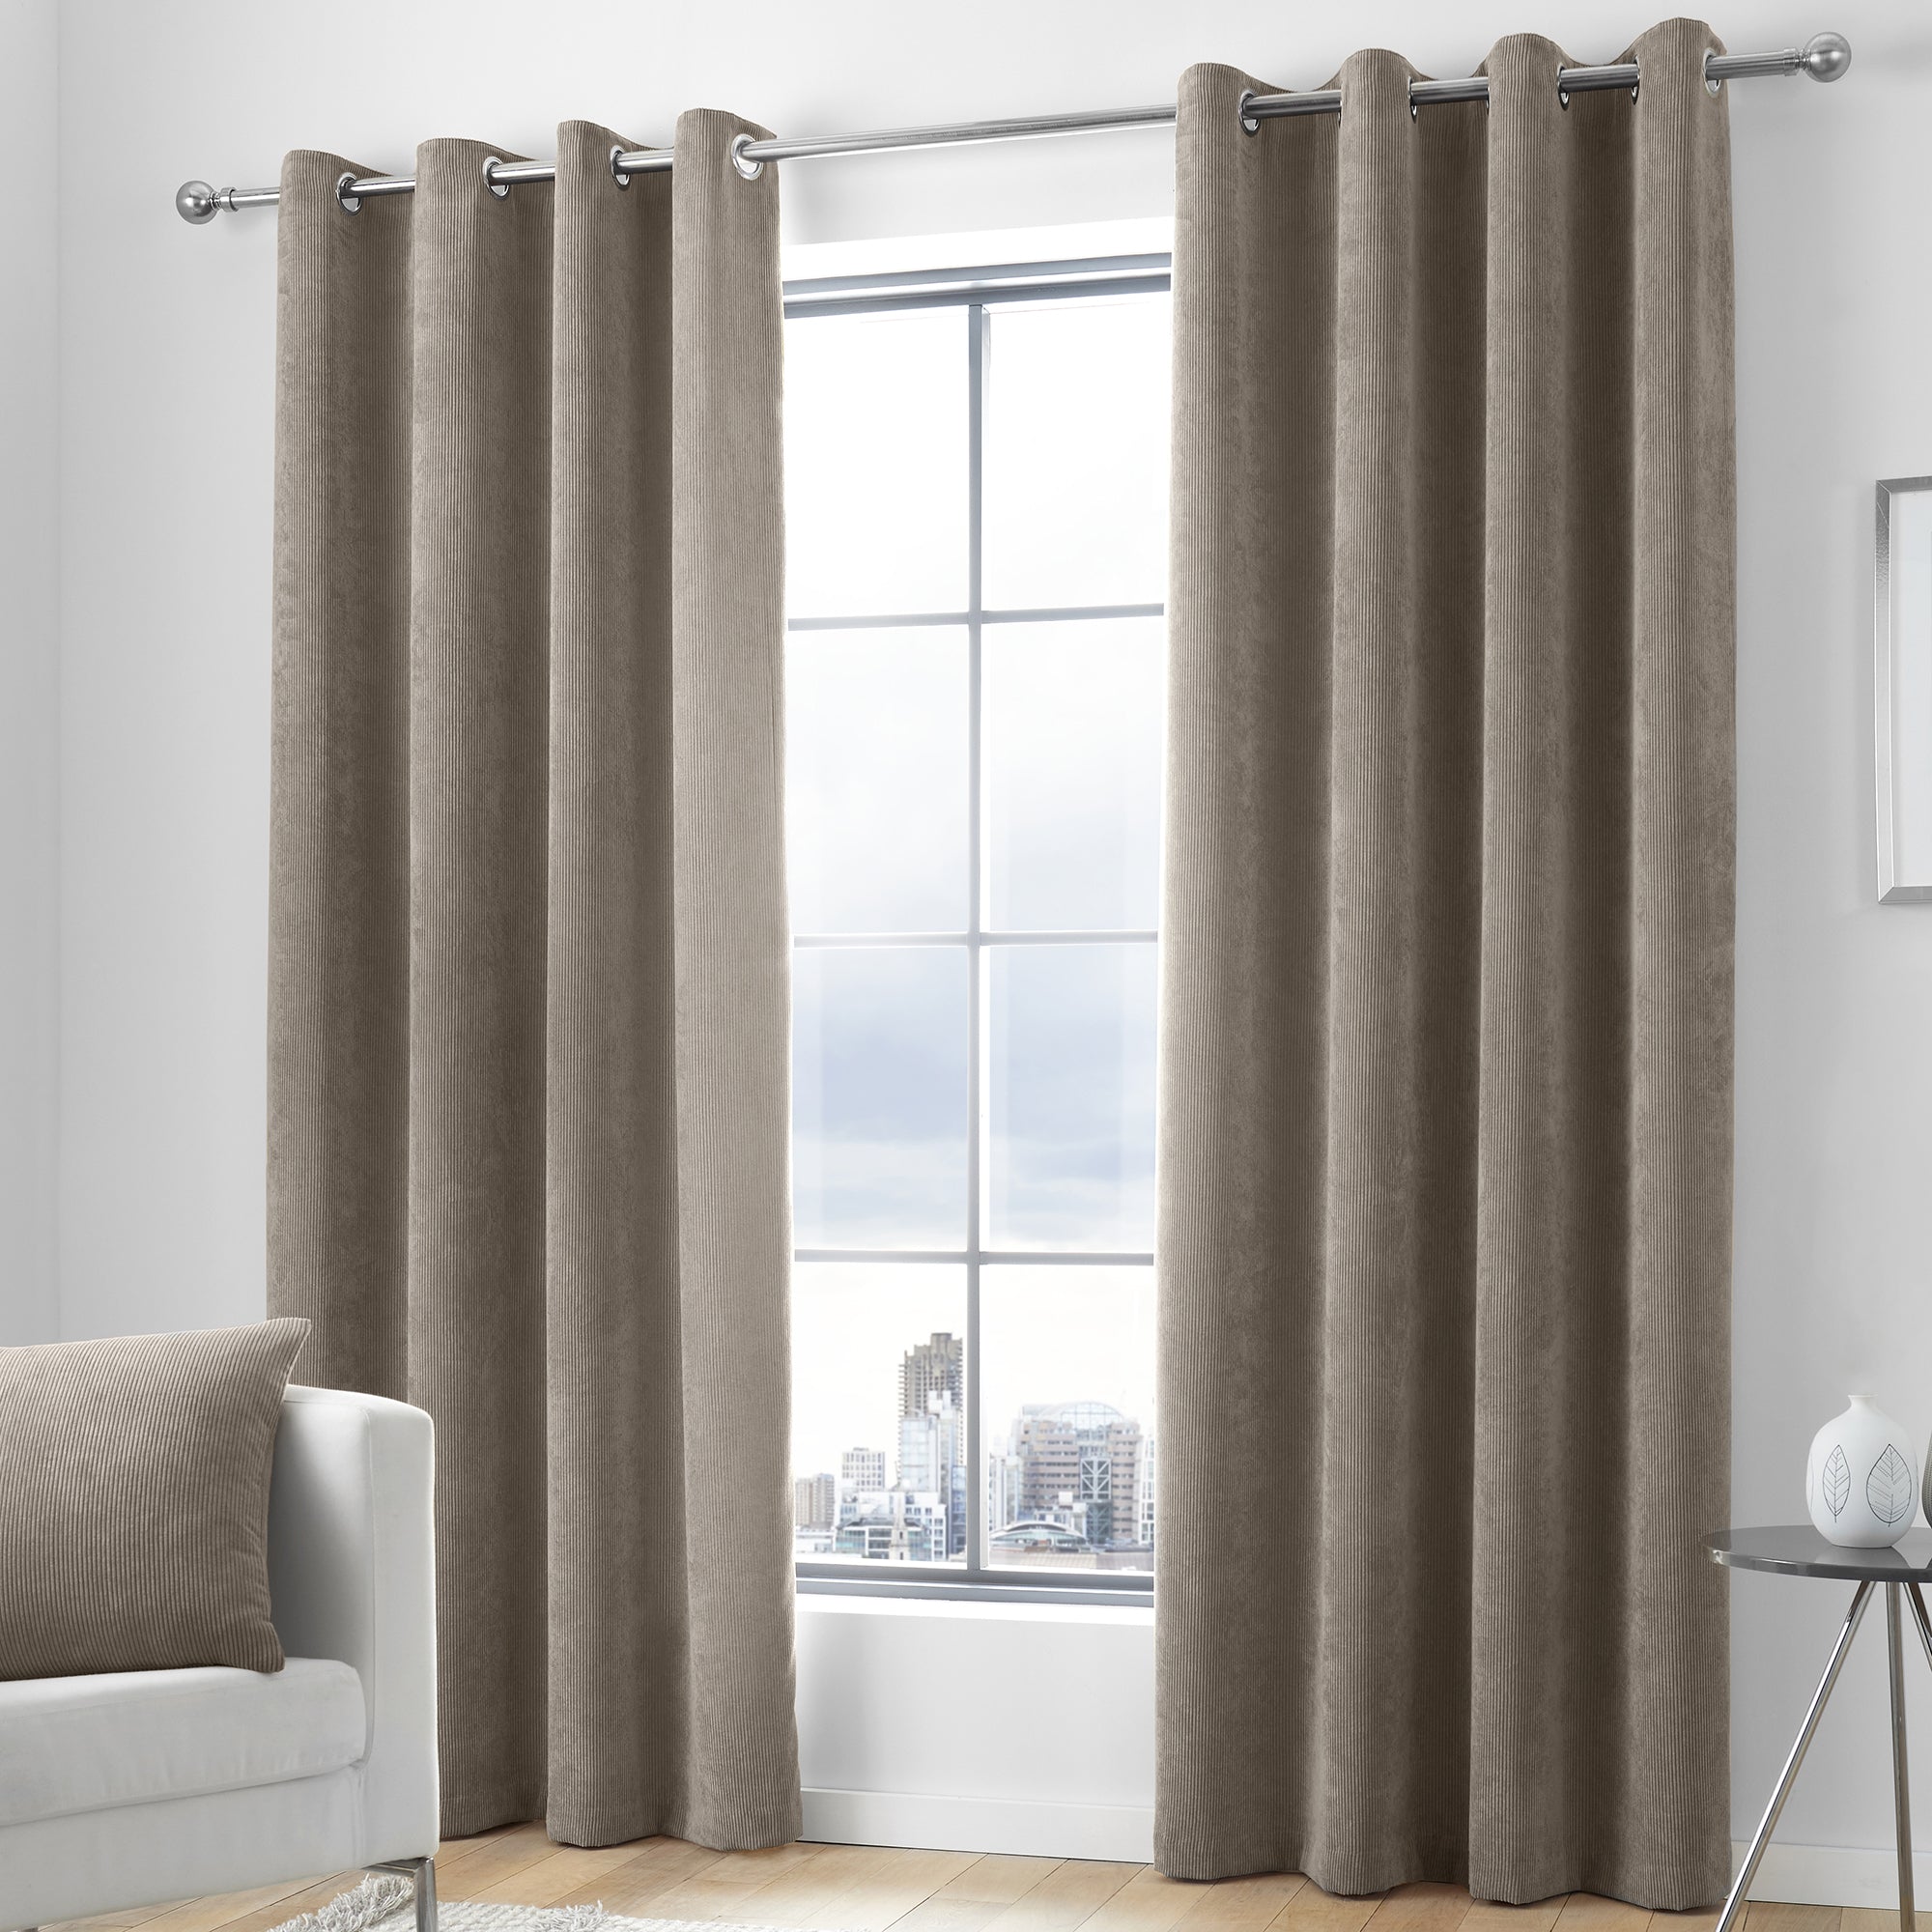 Kilbride Cord - Chenille Eyelet Curtains in Linen - By Appletree Loft